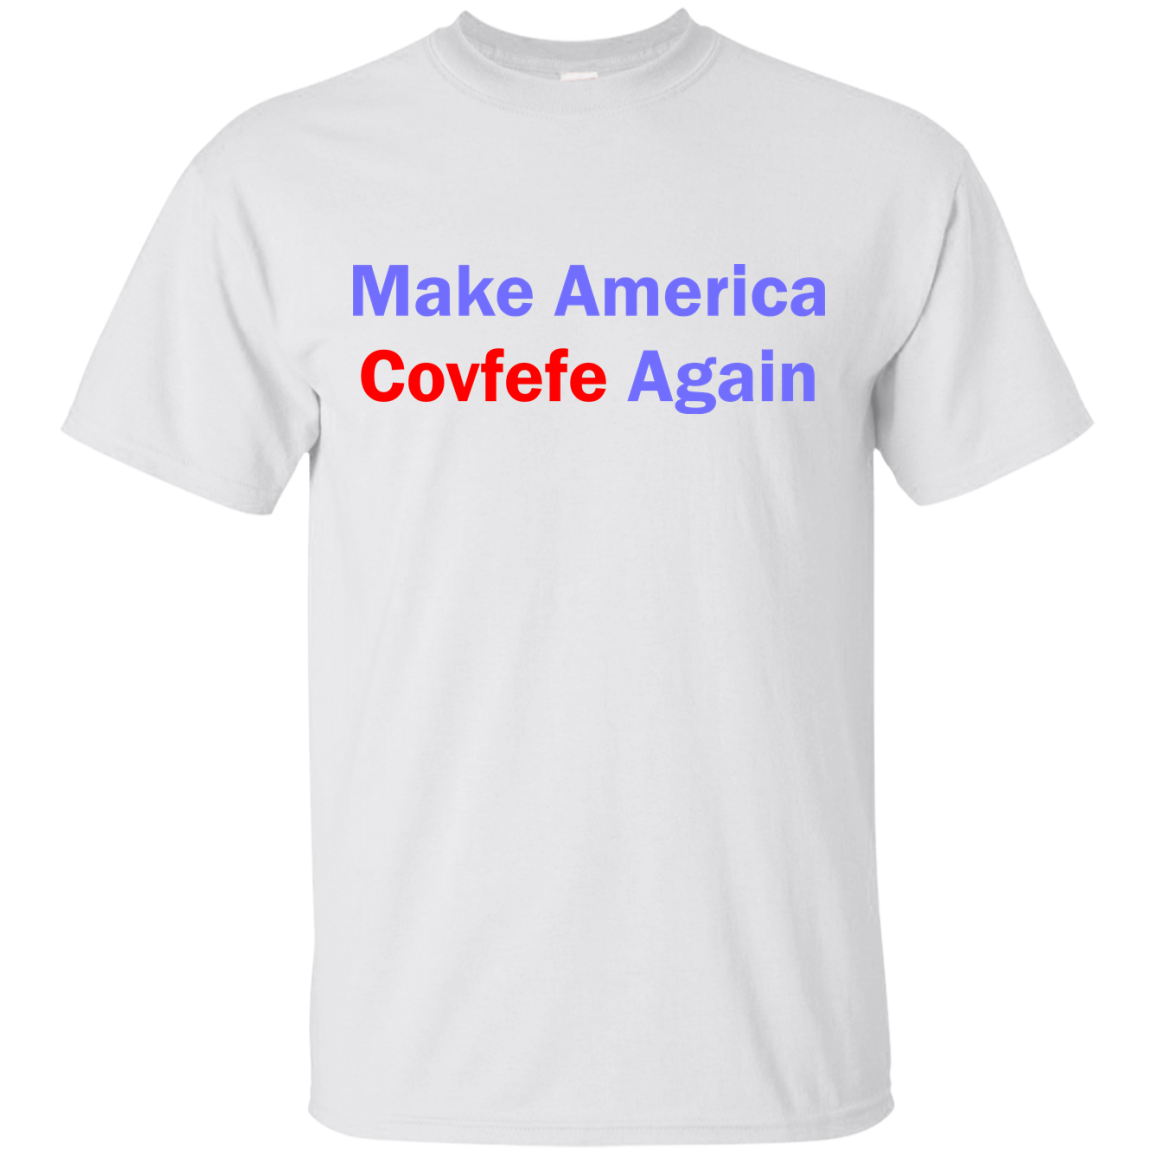 Make America Covfefe Again T-shirt - White shirt